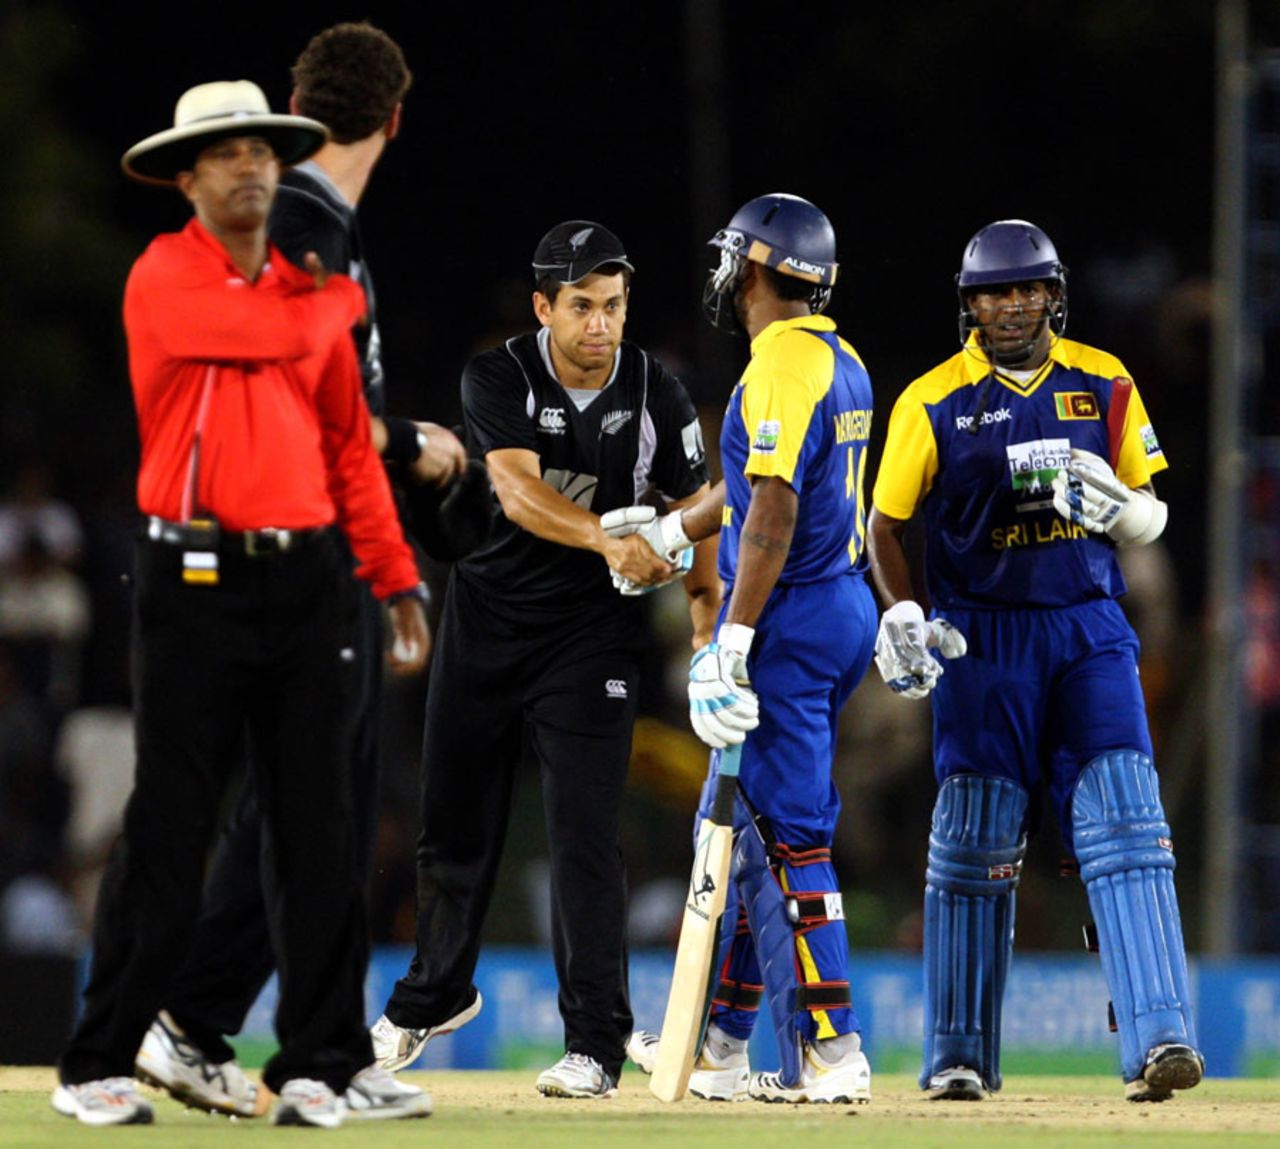 Ross Taylor congratulates Chamara Kapugedera on Sri Lanka's victory, Sri Lanka v New Zealand, tri-series, 2nd ODI, Dambulla, August 13, 2010